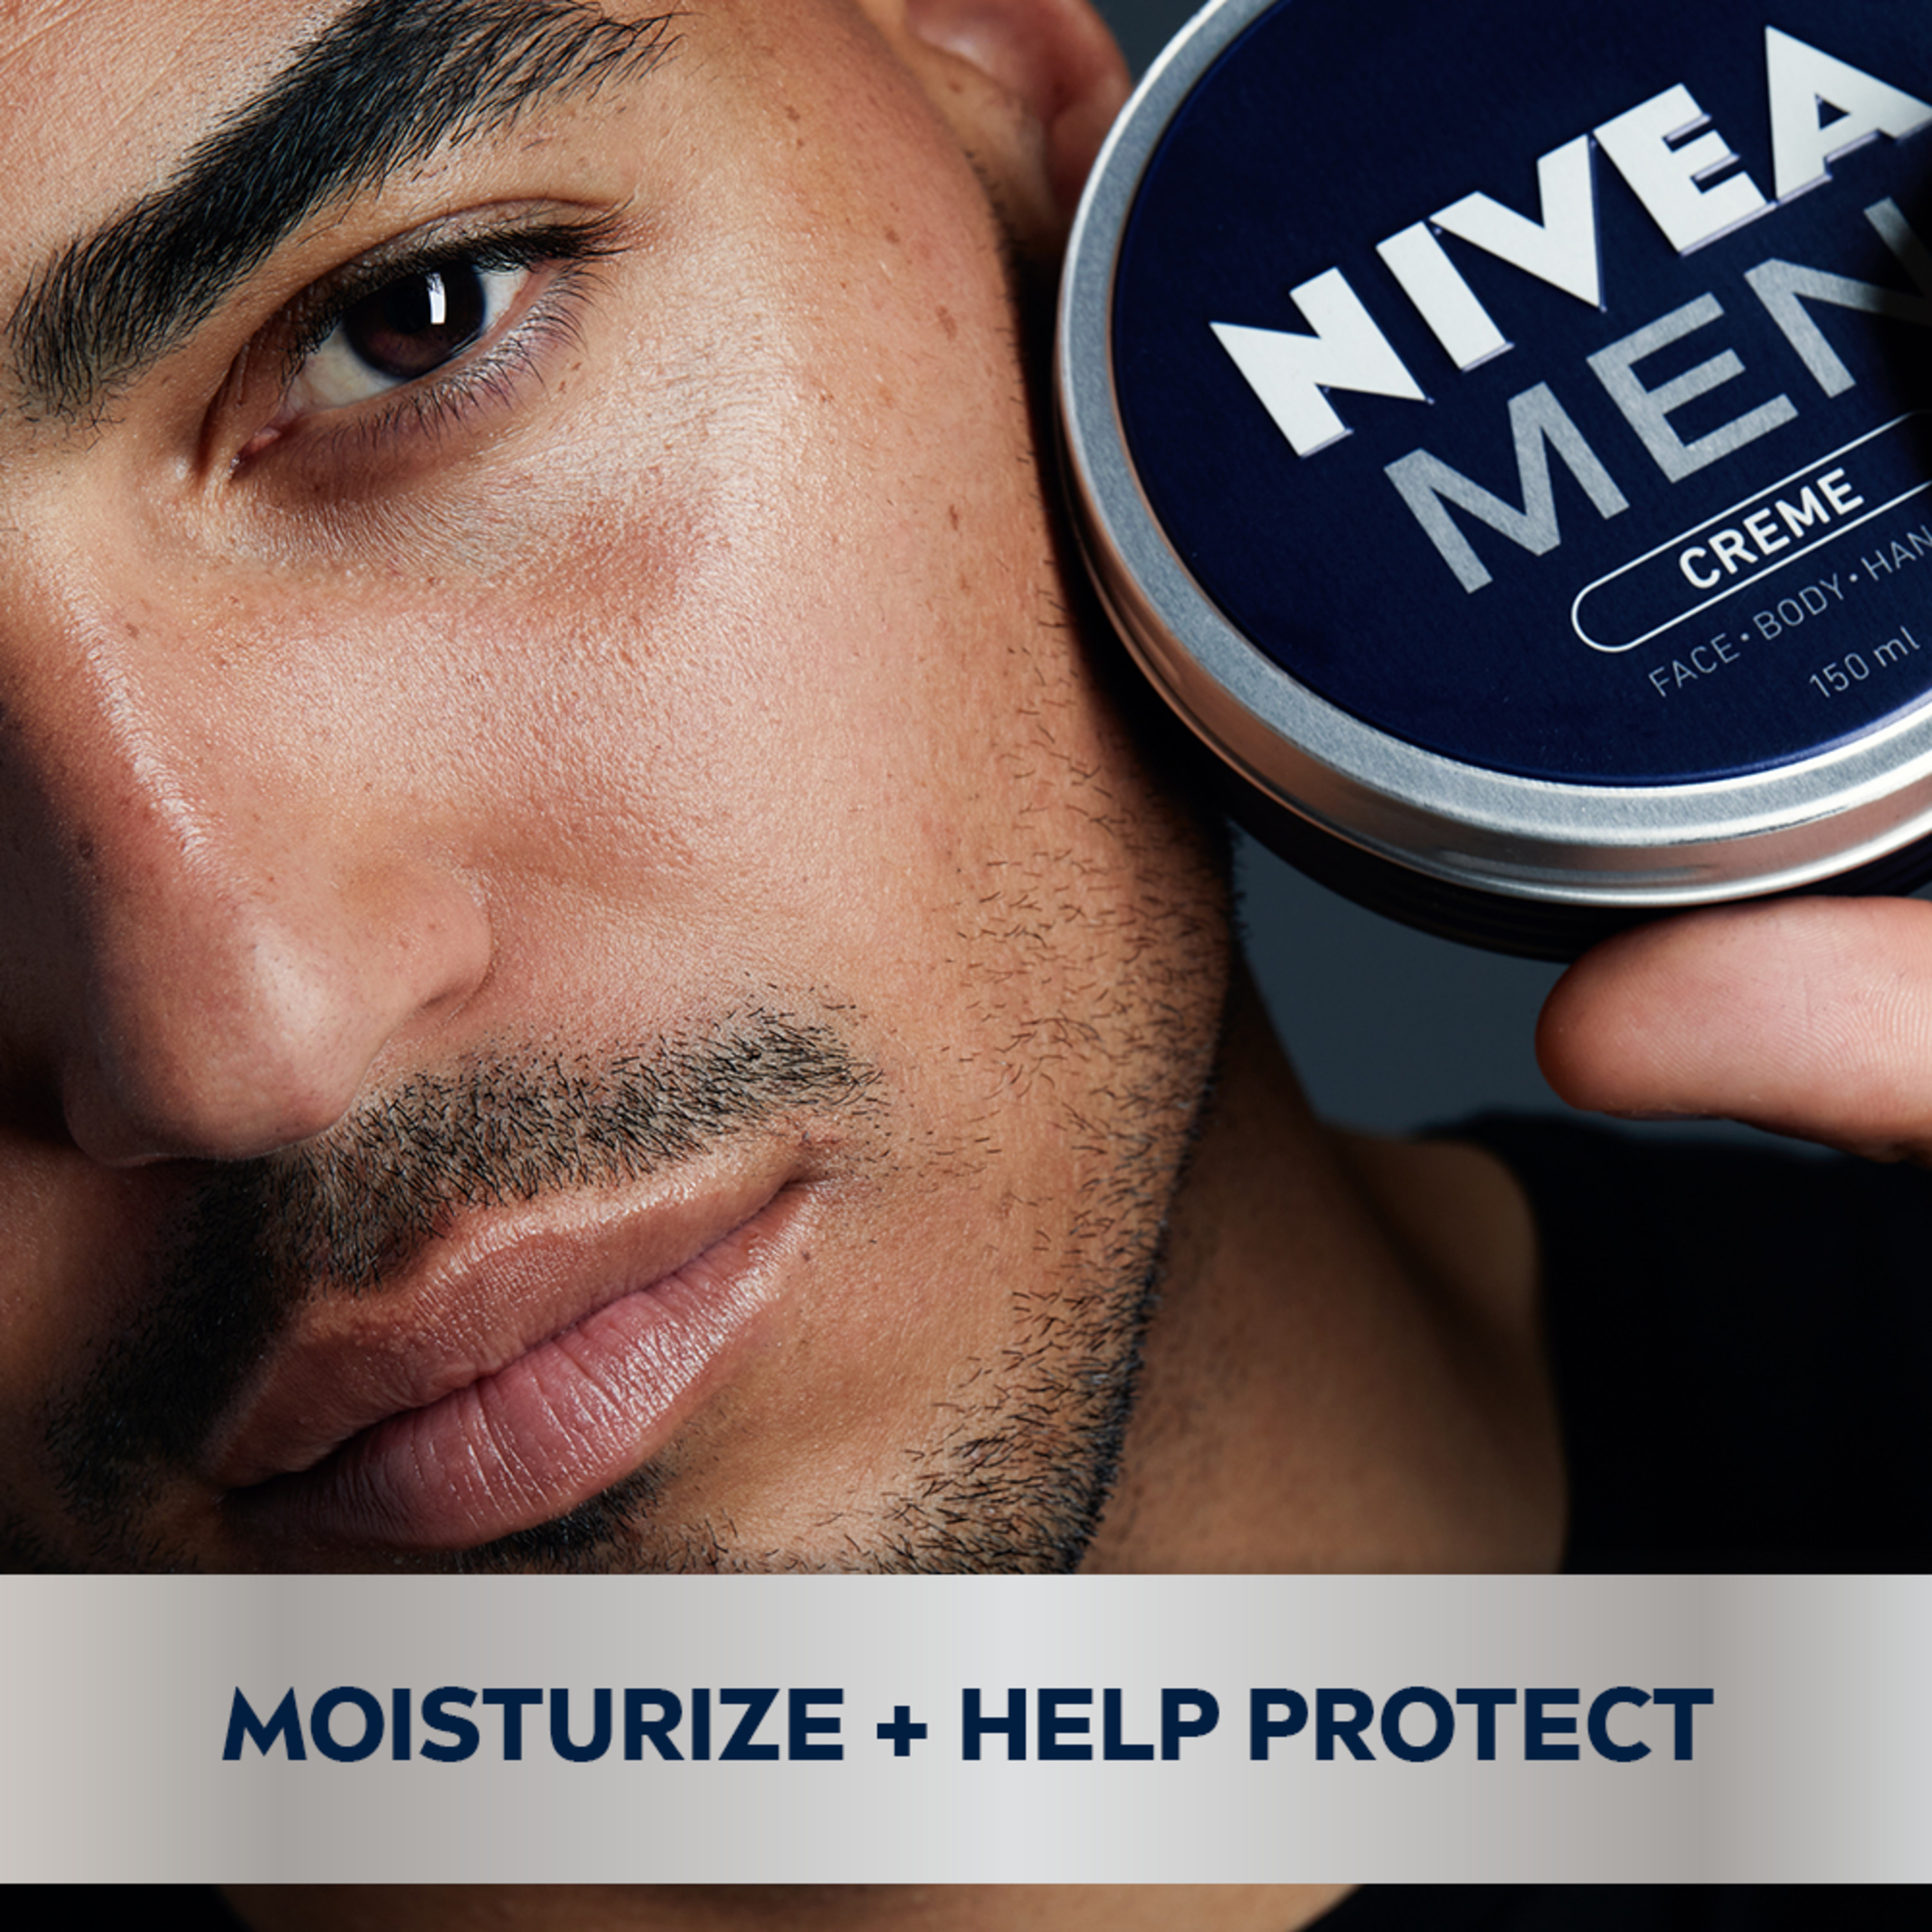 NIVEA MEN Creme, Face Hand and Body Cream, 5.3 oz. - image 3 of 6